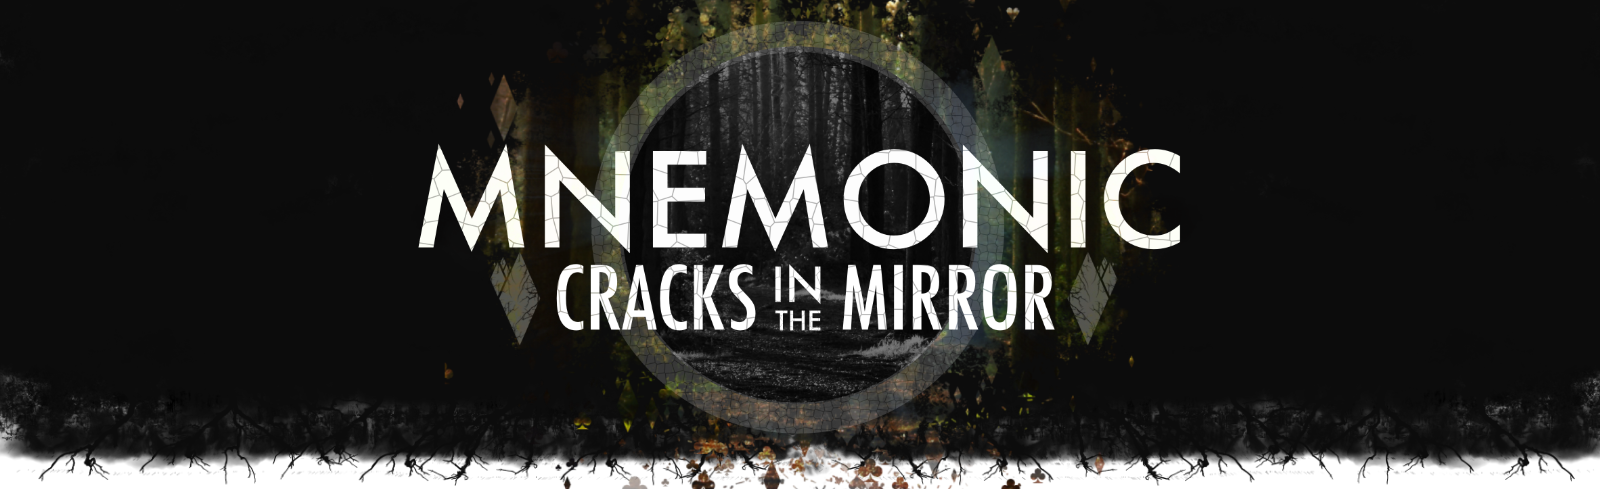 Cracks in the Mirror